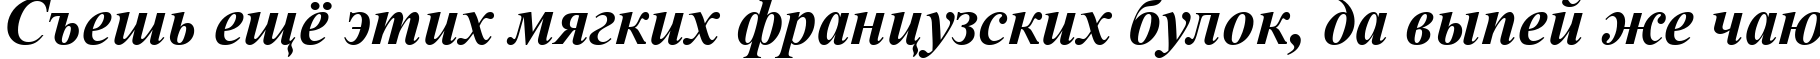 Пример написания шрифтом font237 текста на русском